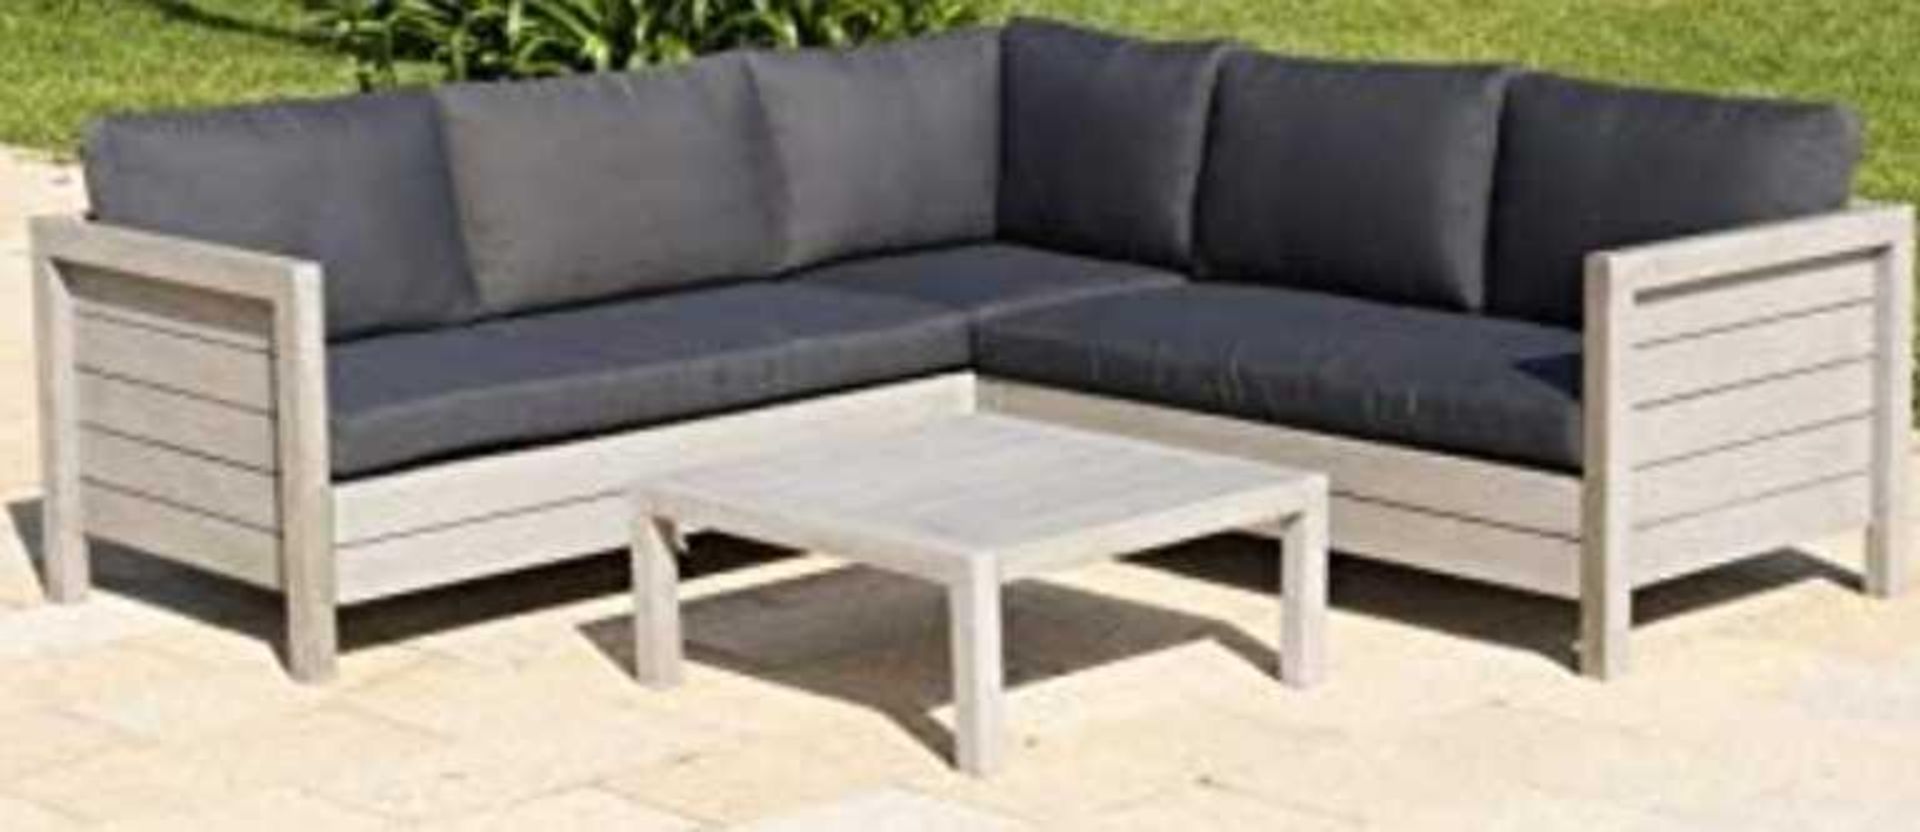 RRP £1300 Boxed Backyard Furniture Lodge - Chunky Fusc Solid Hardwood Grey wash Corner Lounge Set Wi - Image 3 of 4